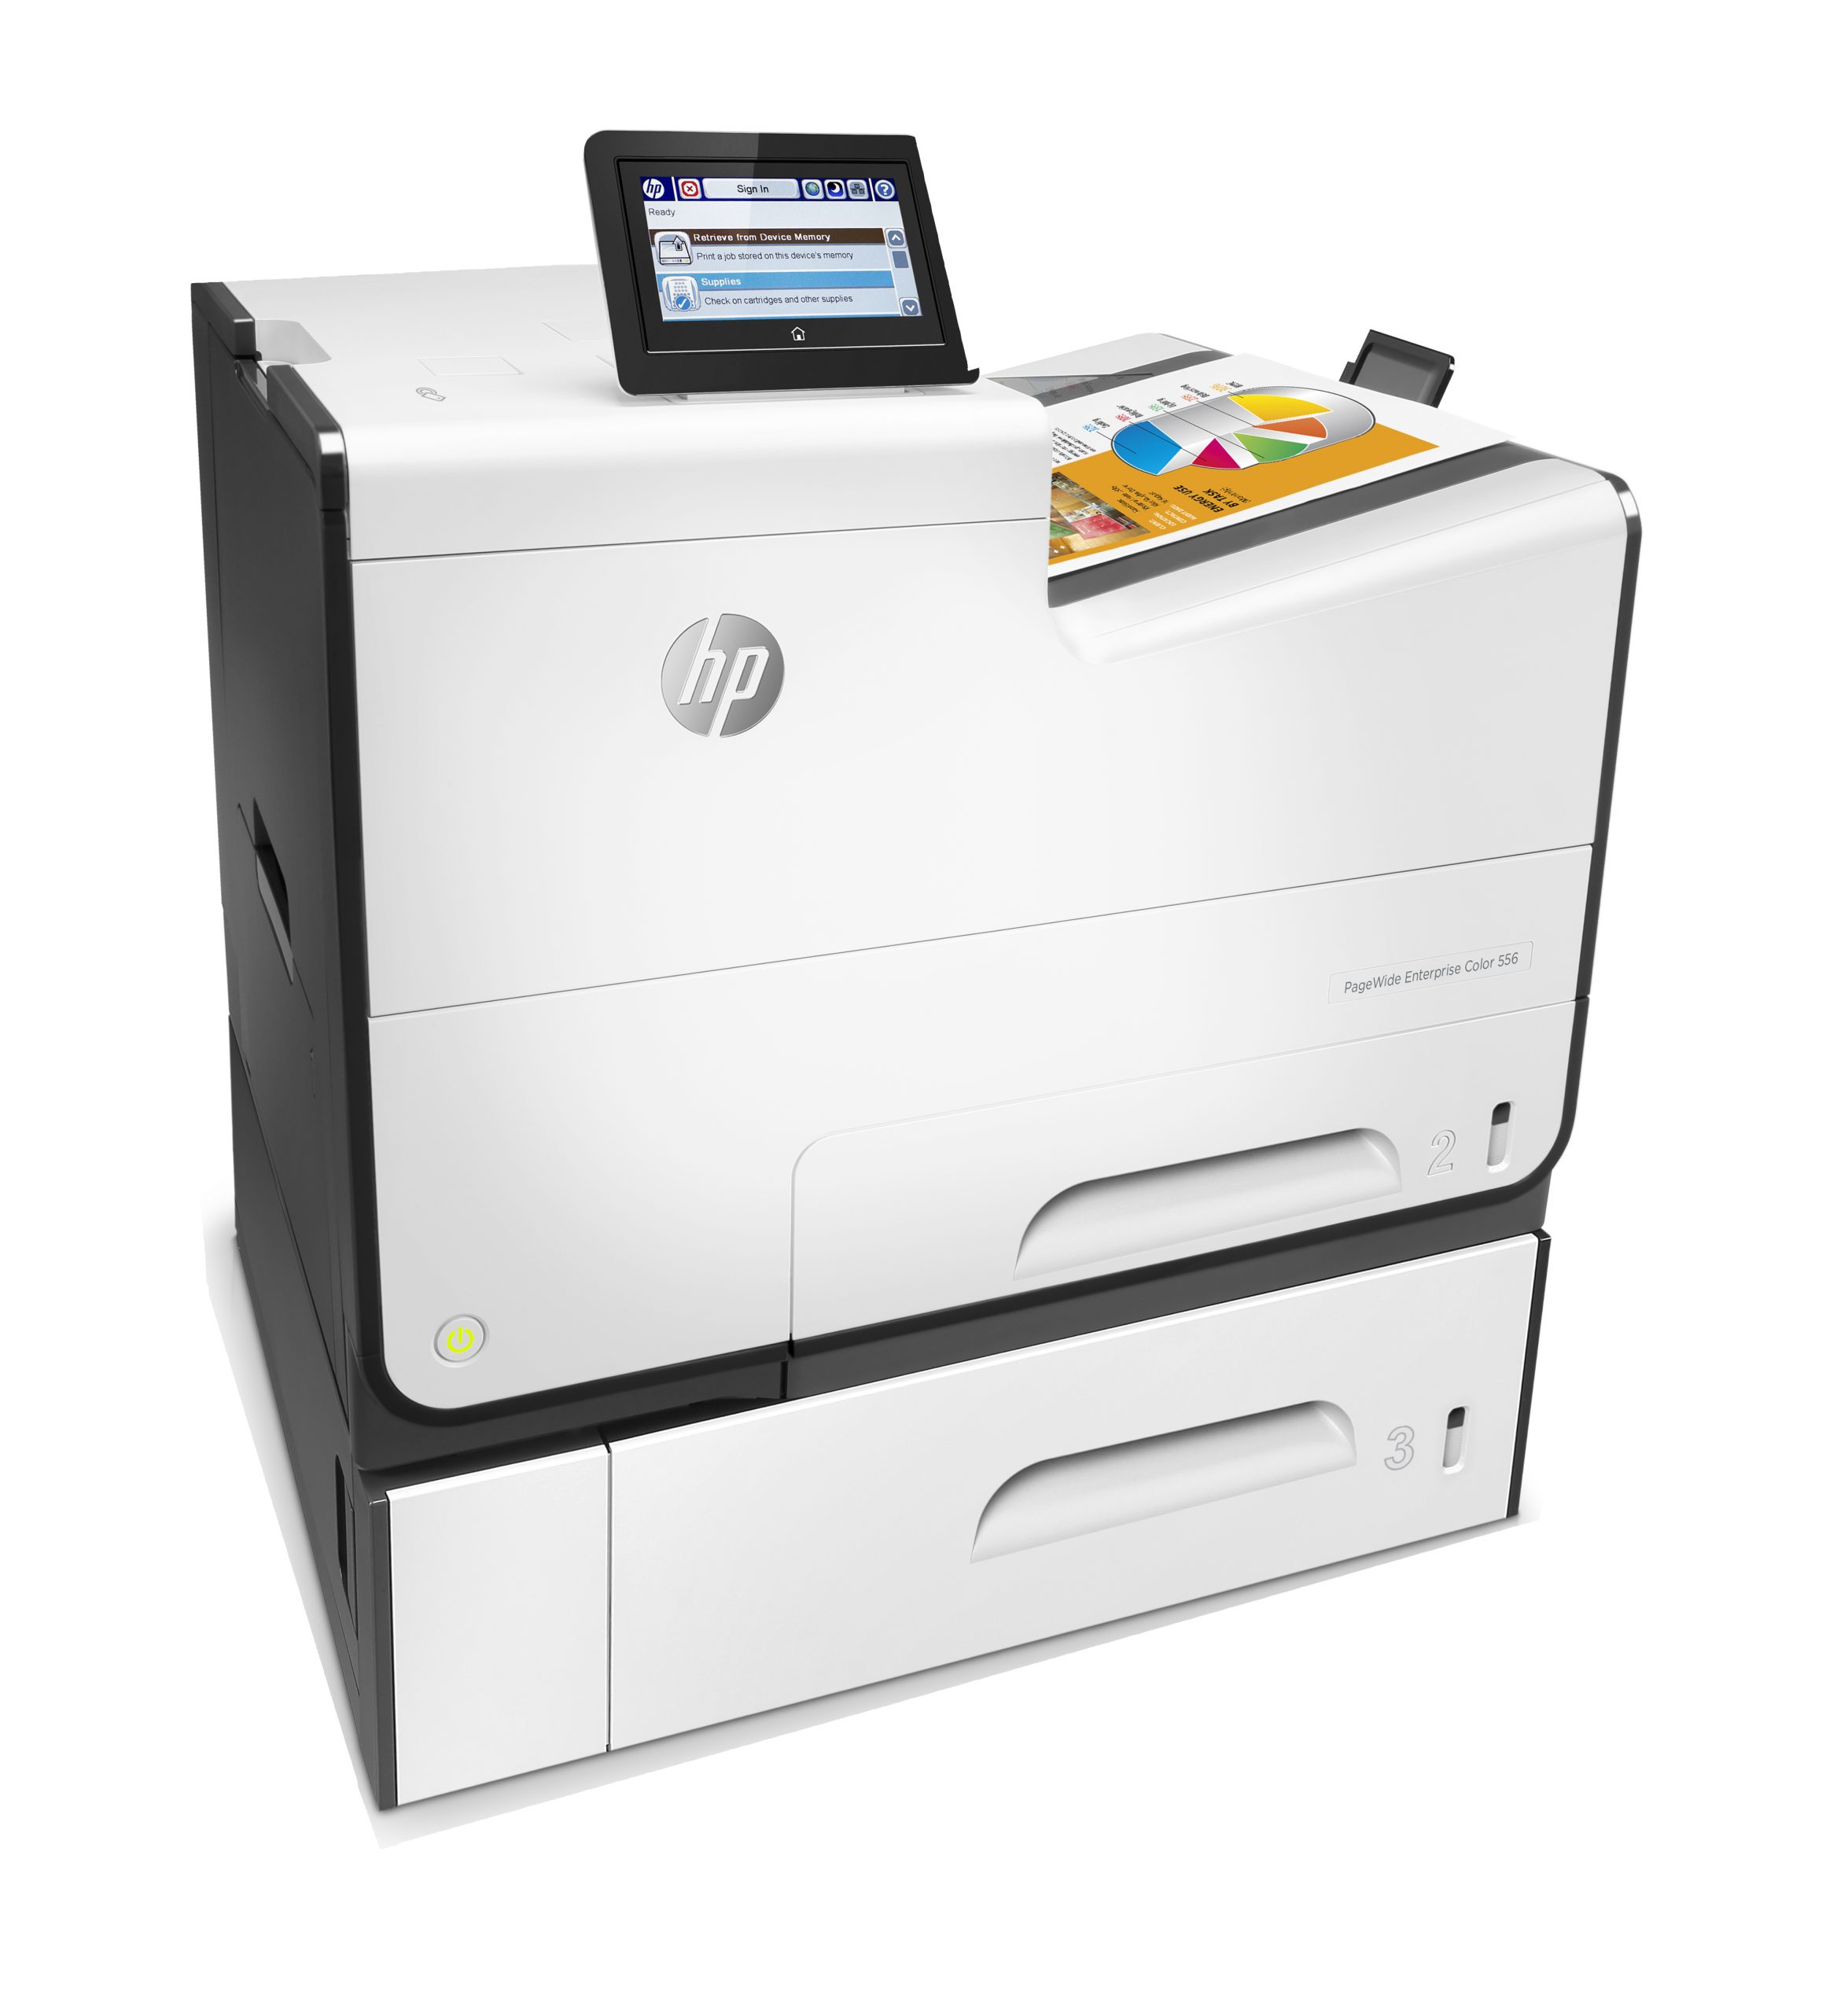 HP PadeWide Enterprise Color 556hx A4 pigment ink printer 2400x1200DPI 50ppm WiFi NETWORK